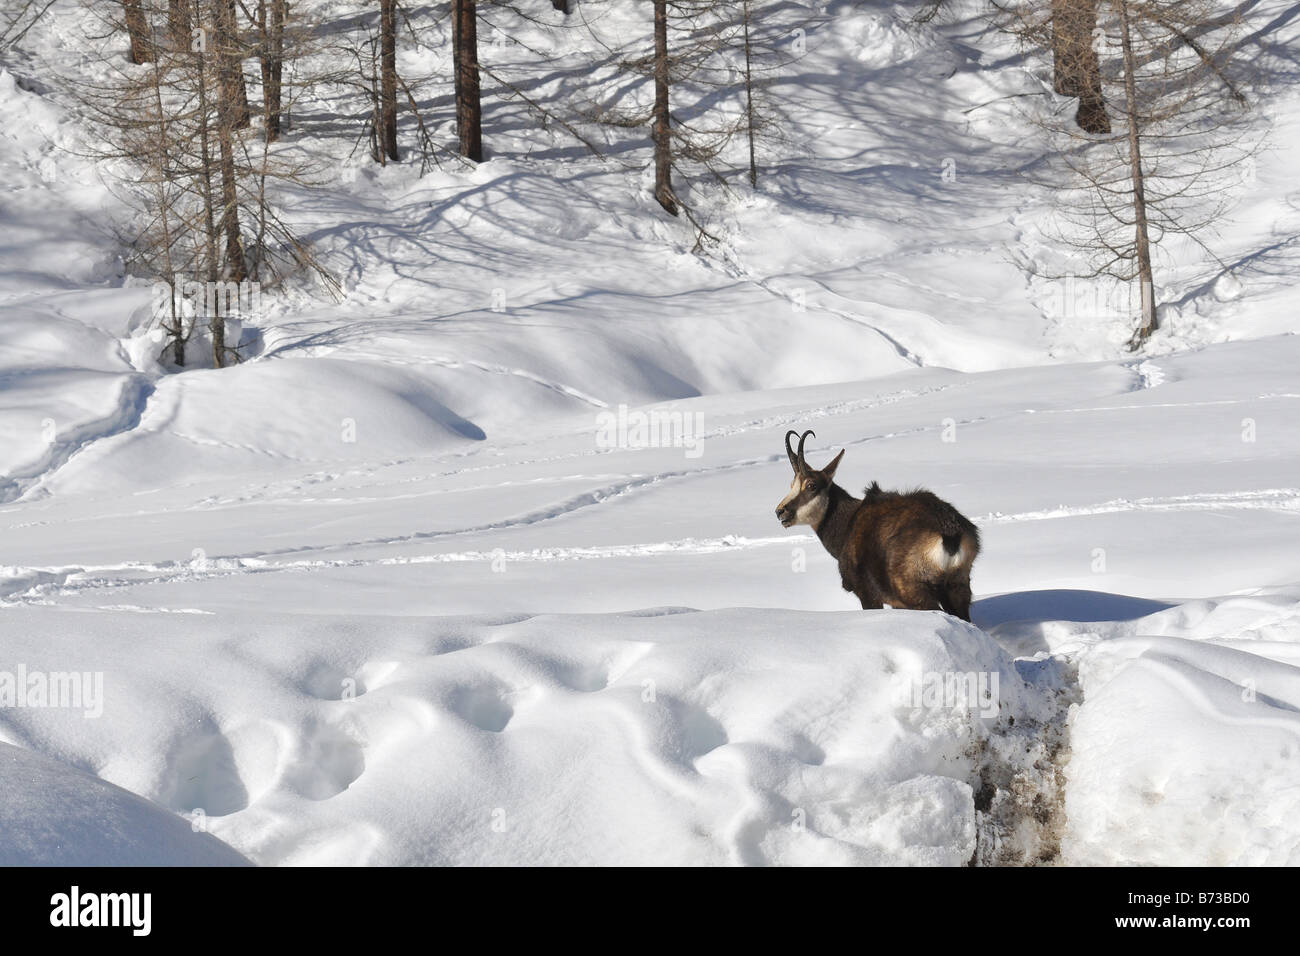 Chamois Rupicapra rupicapra camoscio torbiera inverrno neve hiver neige Parco Nazionale Gran Paradiso Valle d aosta Italia Italie Banque D'Images